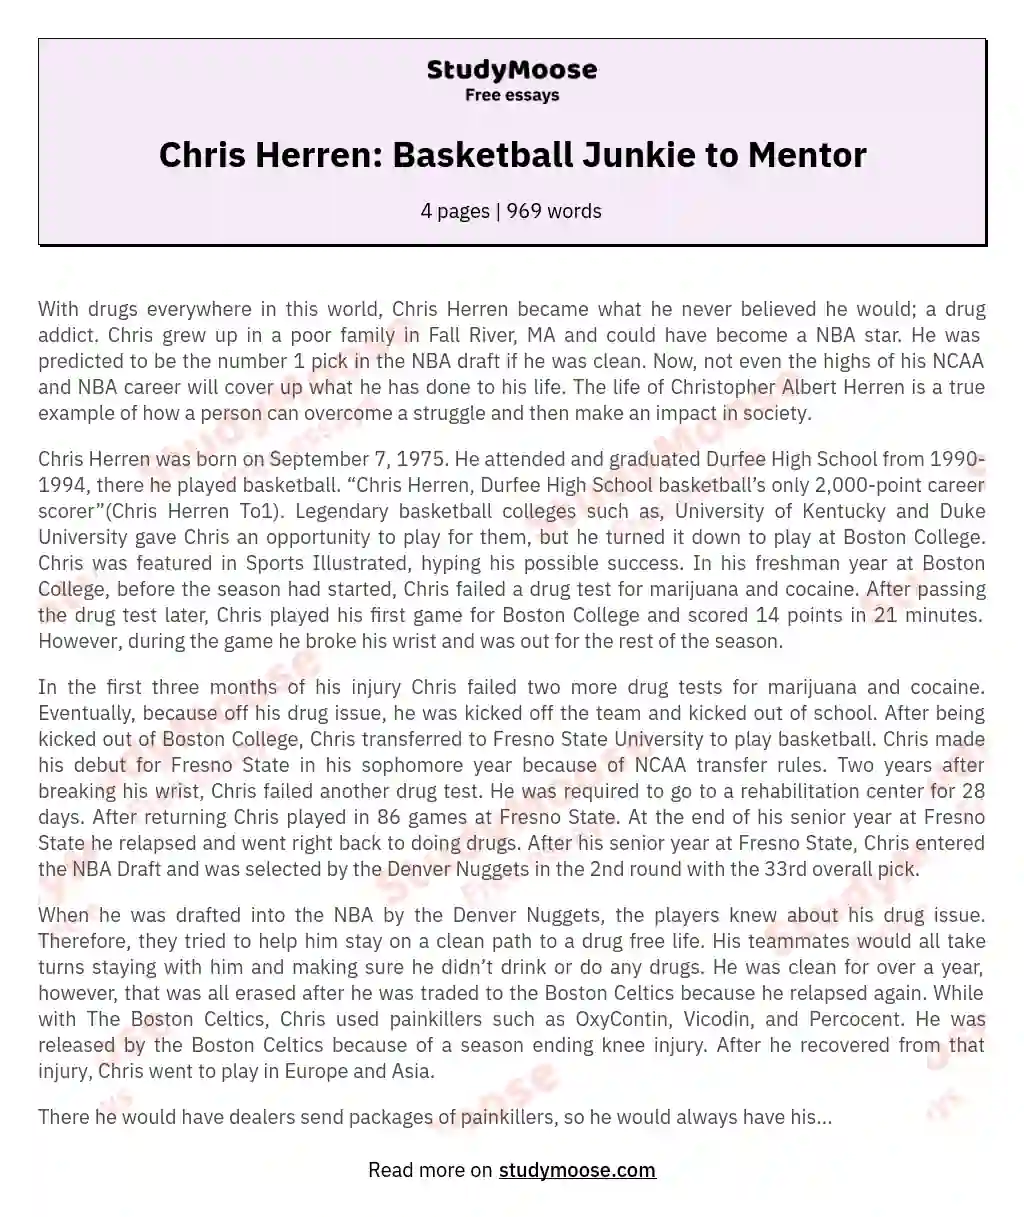 Chris Herren: Basketball Junkie to Mentor essay